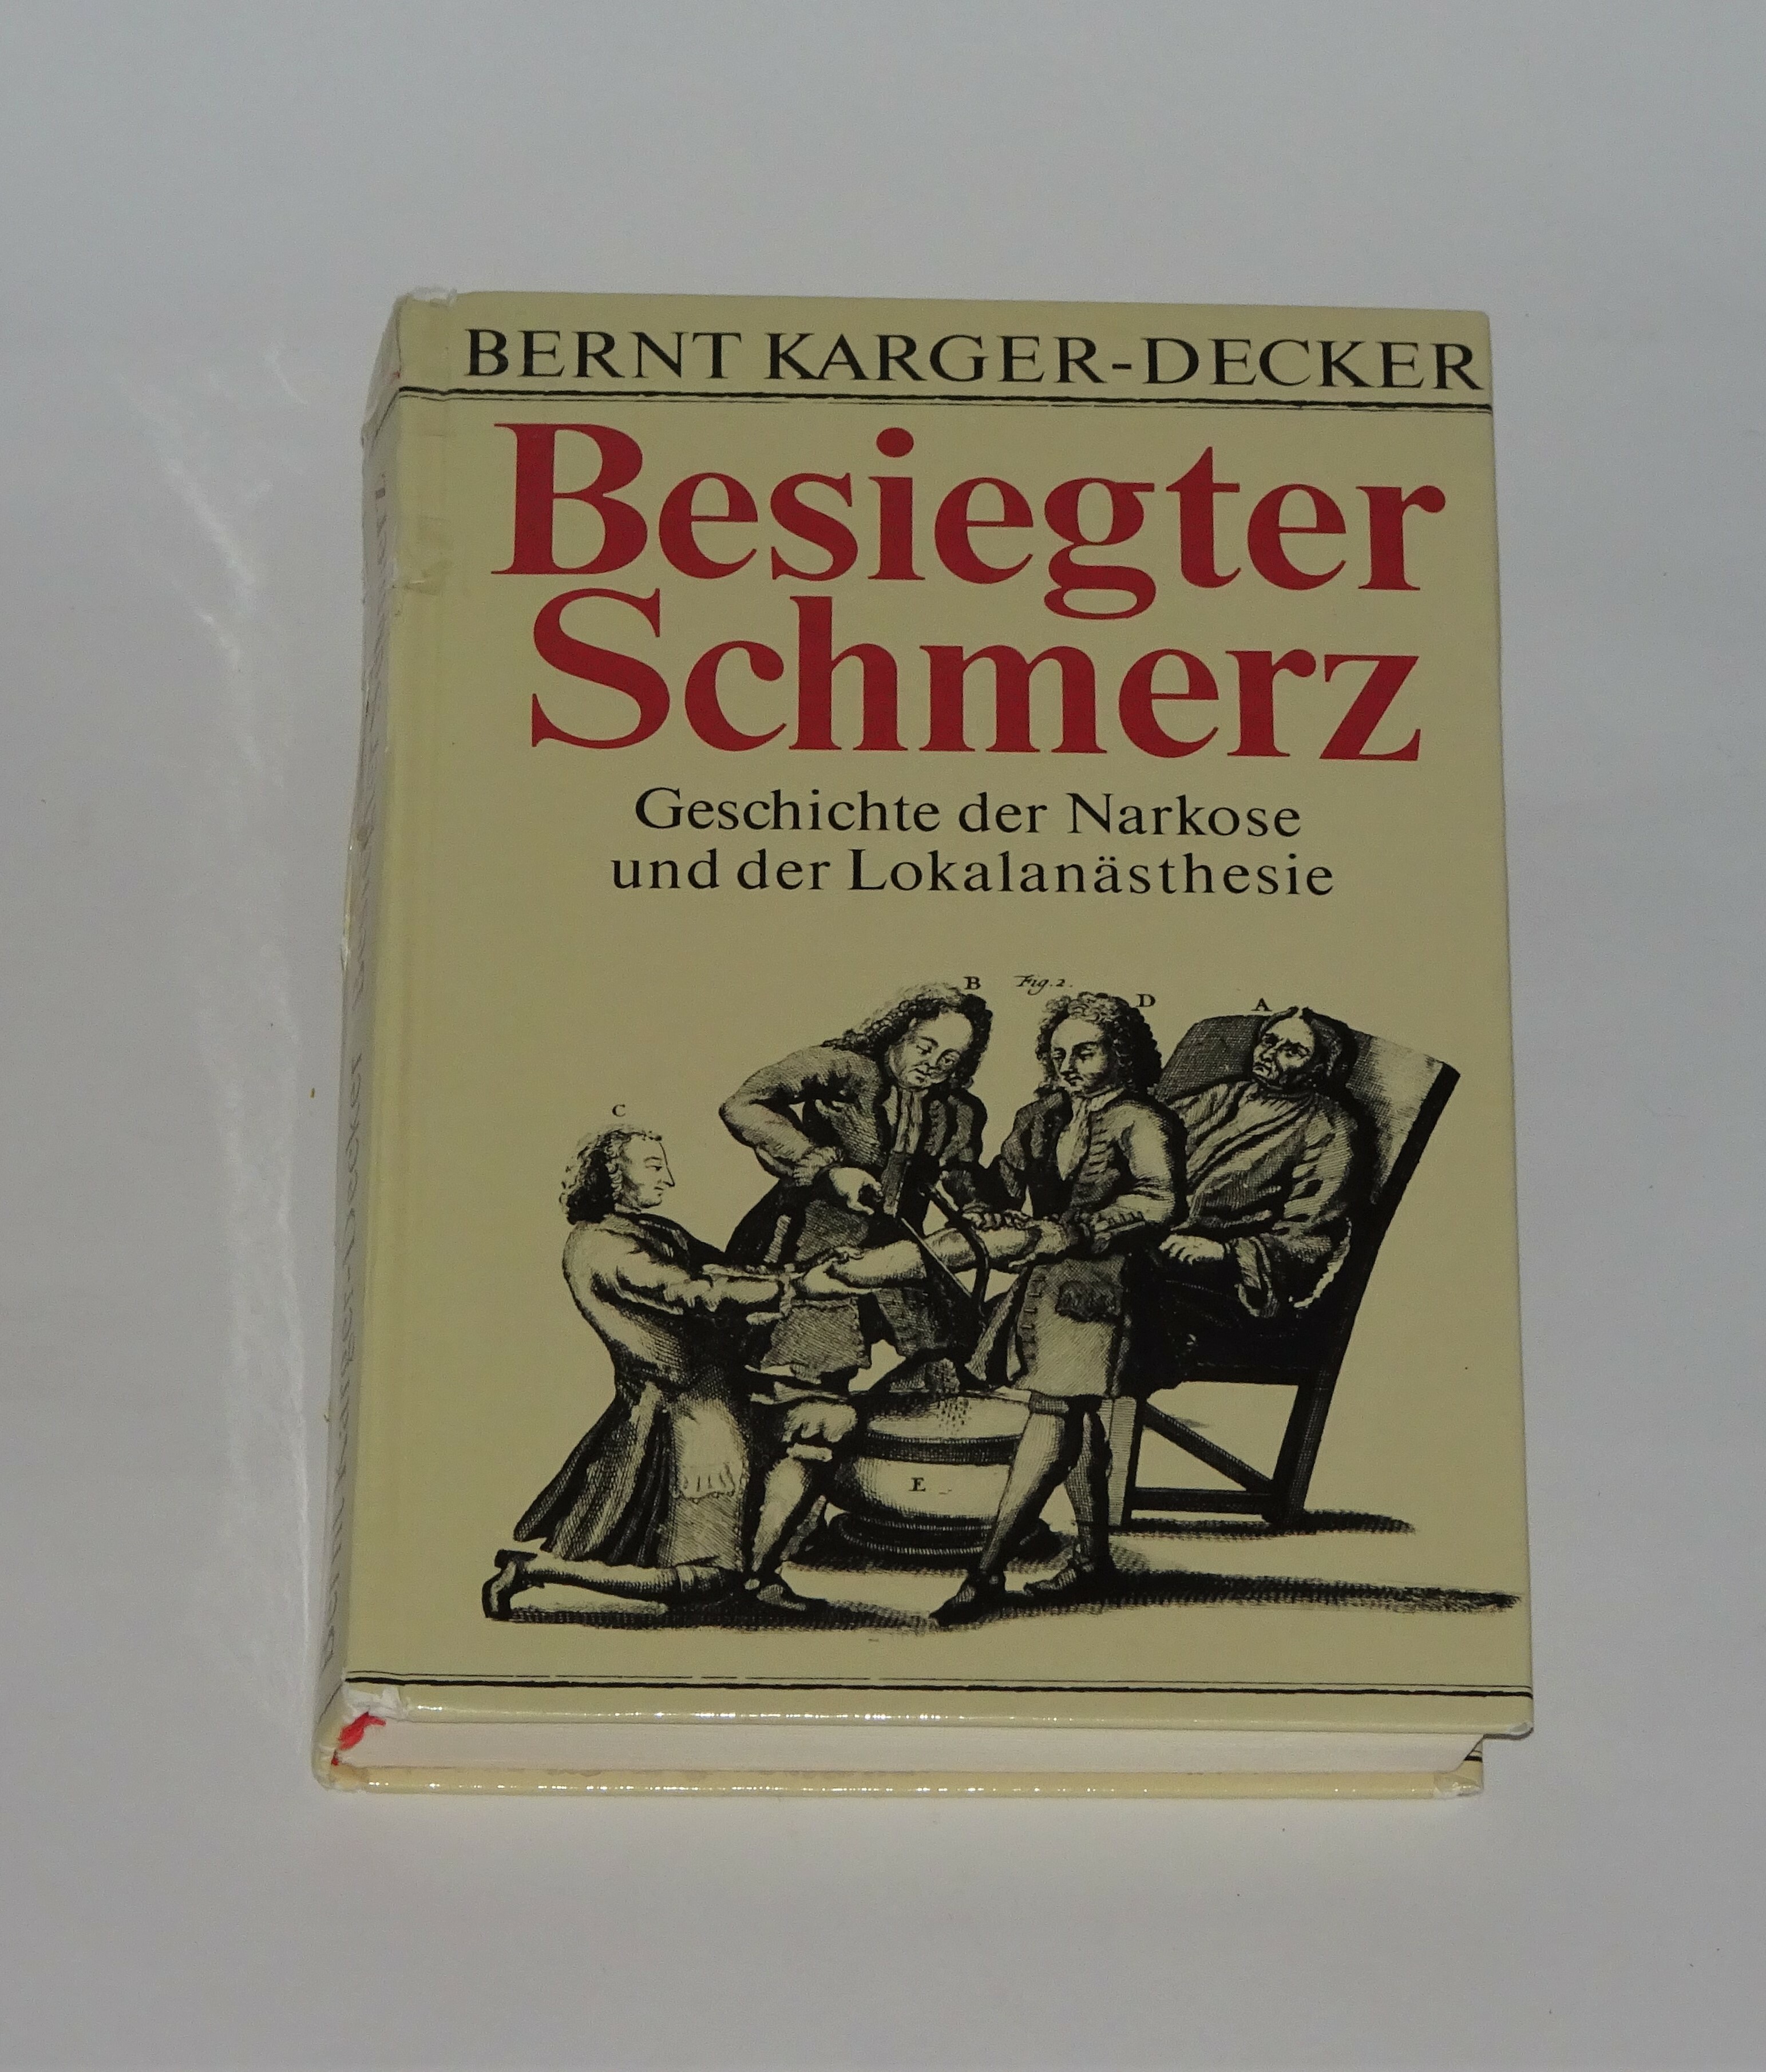 "Besiegter Schmerz" (Klinikum Chemnitz gGmbH CC BY-NC-SA)